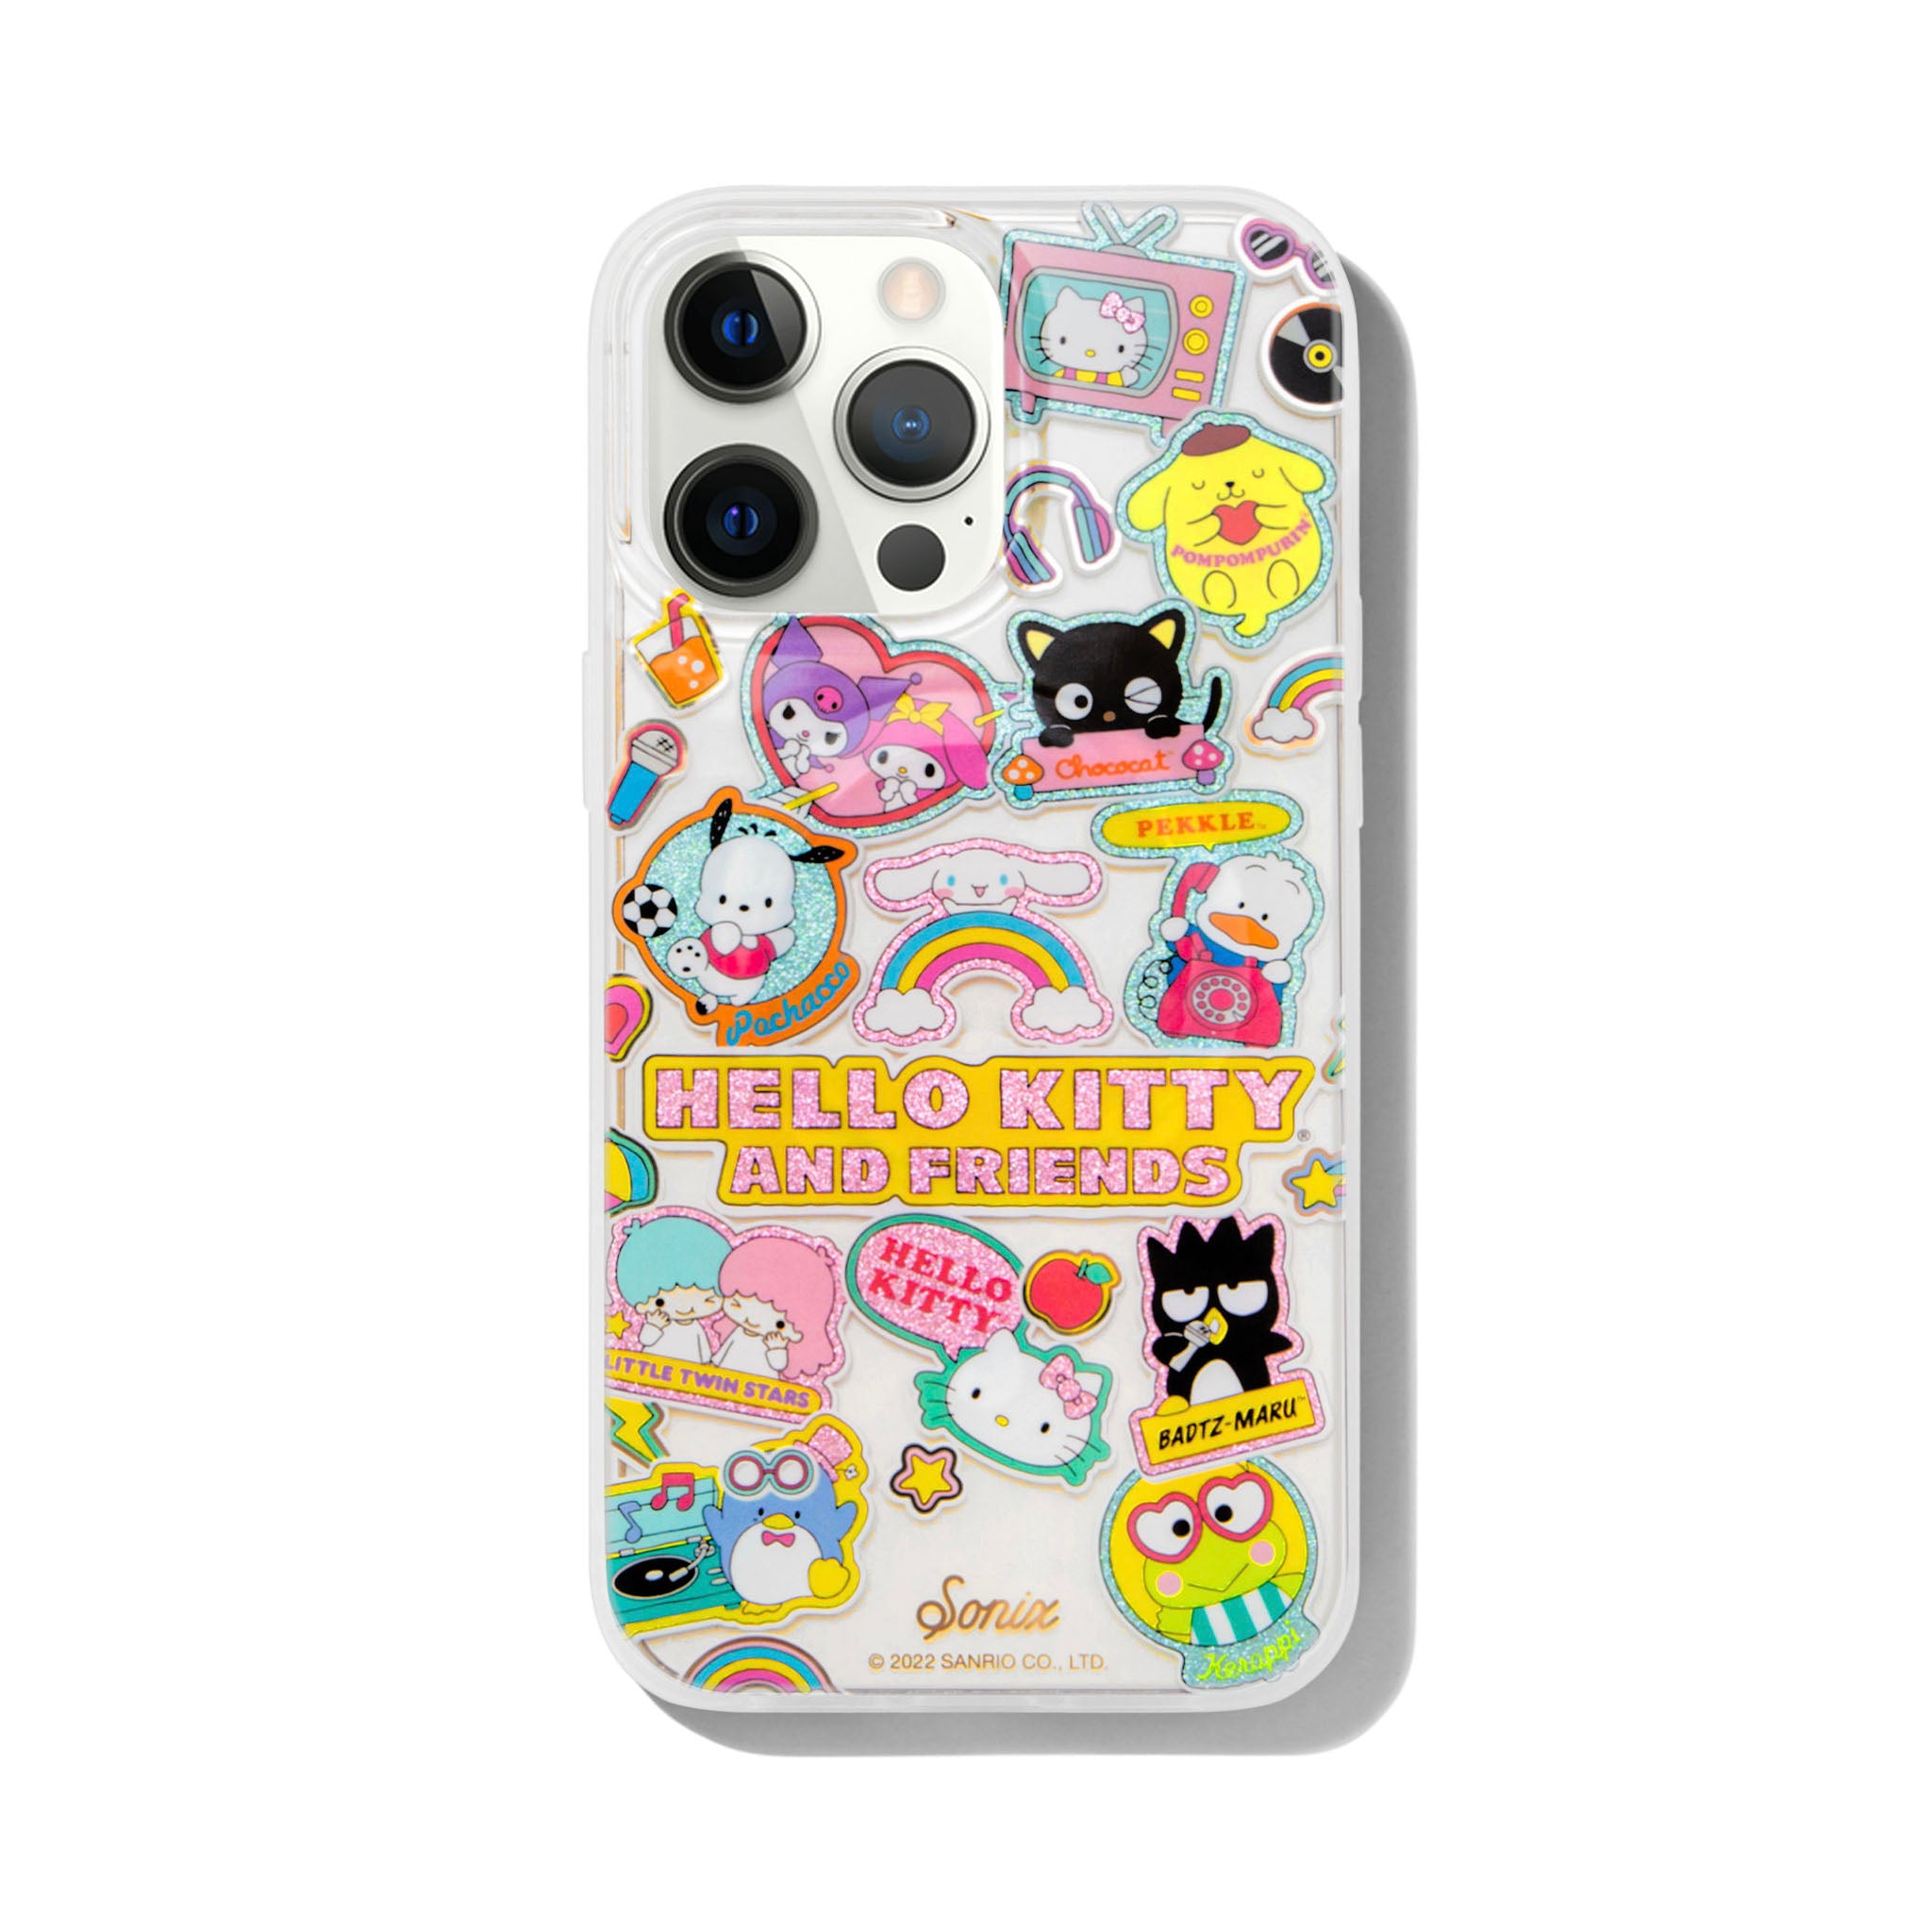 regering Onregelmatigheden Ik wil niet Hello Kitty & Friends x Sonix Stickers MagSafe® Compatible iPhone Case